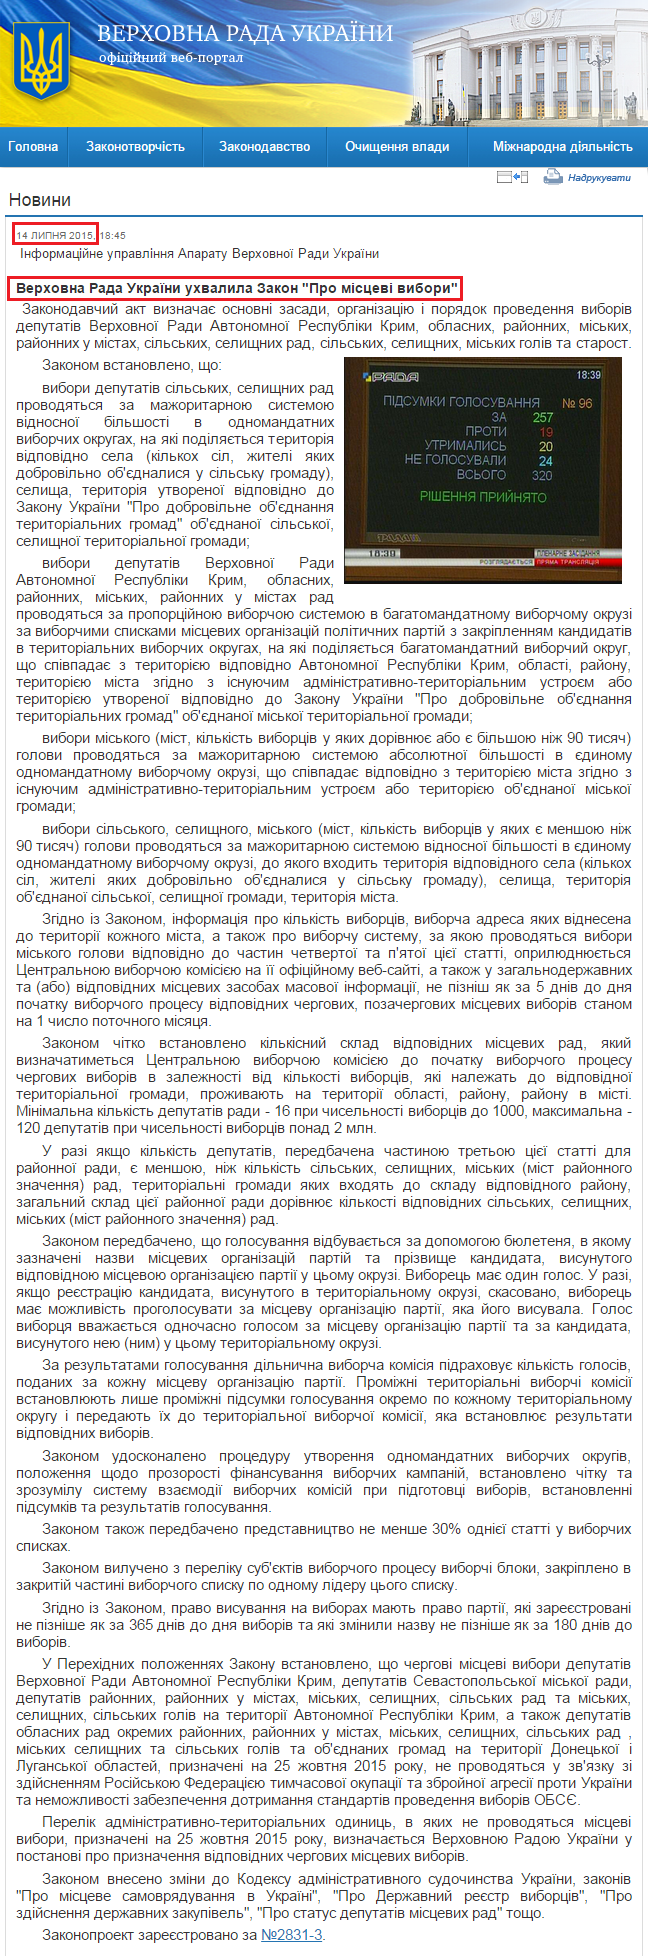 http://iportal.rada.gov.ua/news/Novyny/113636.html 